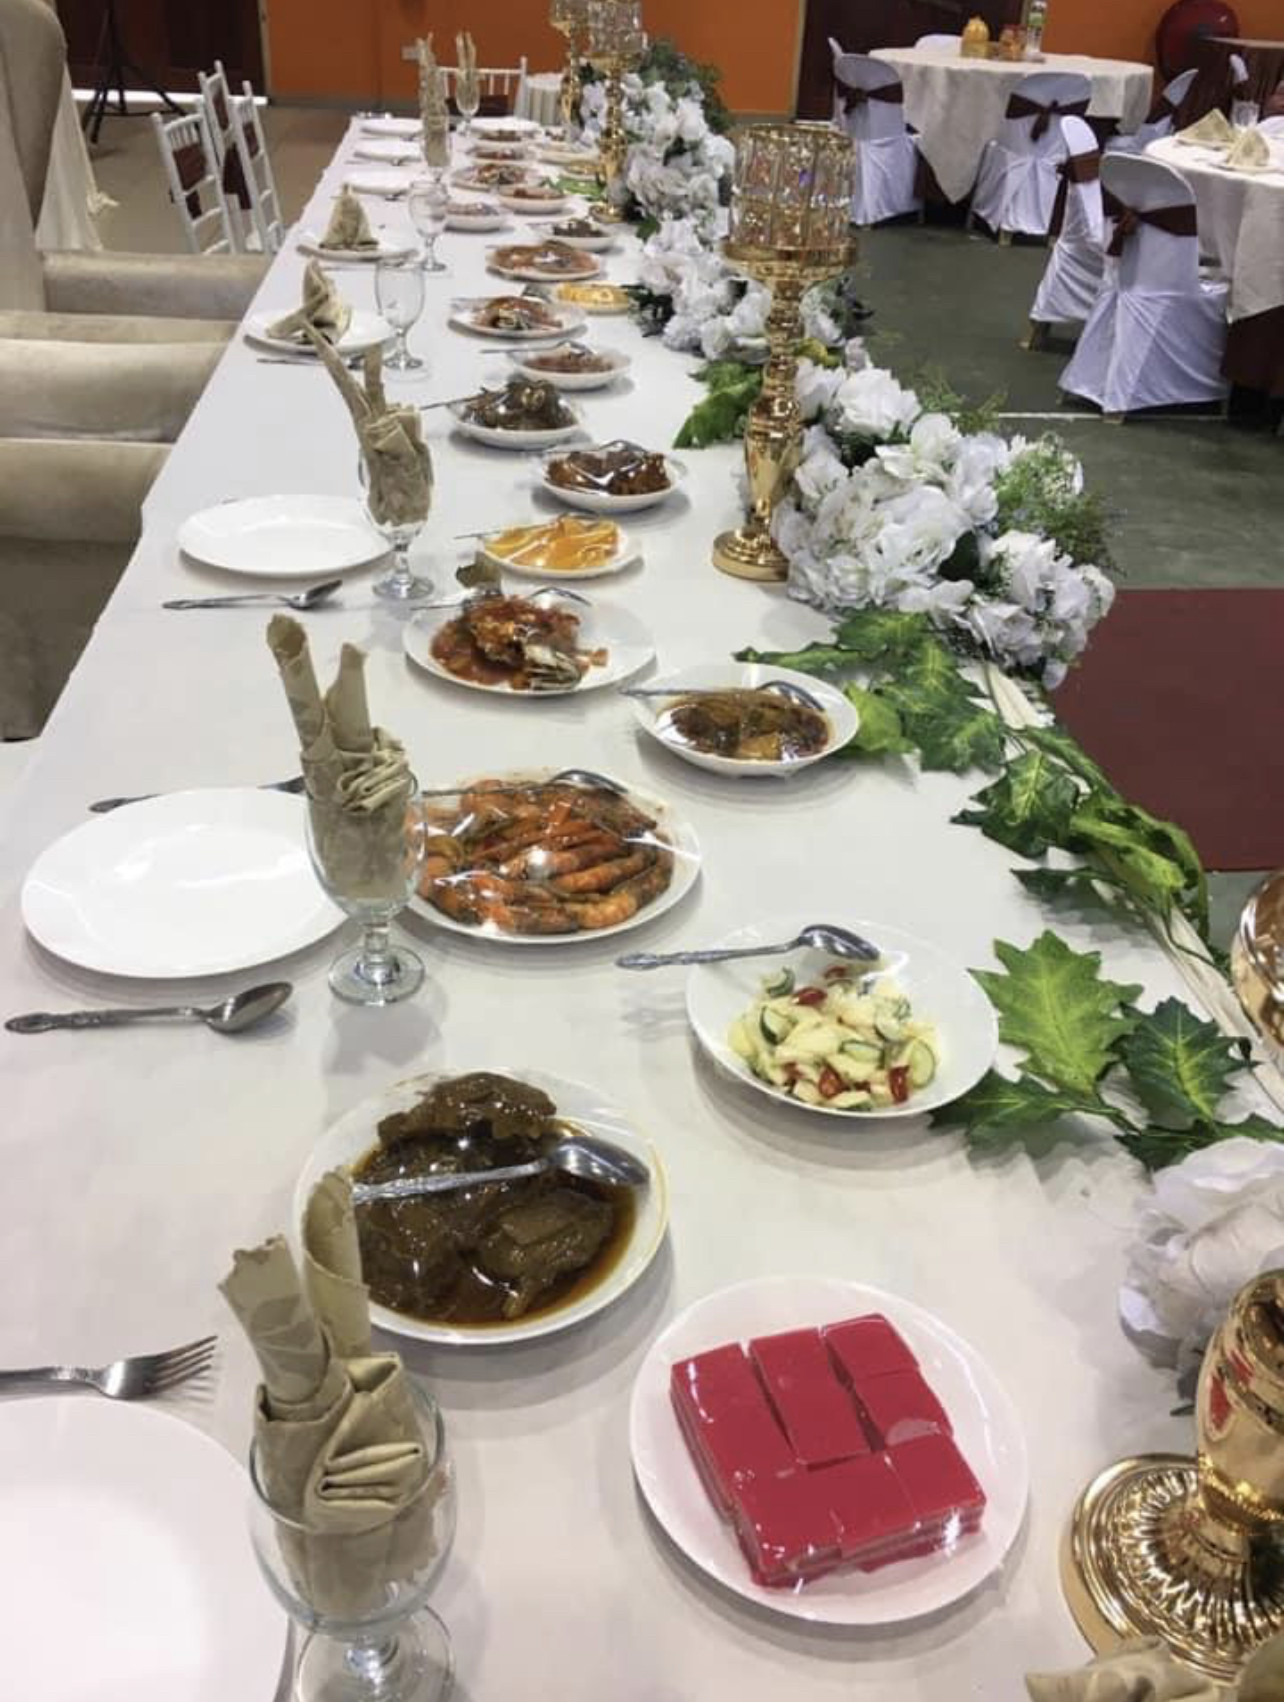 Sri Wangsa Event & Catering Services